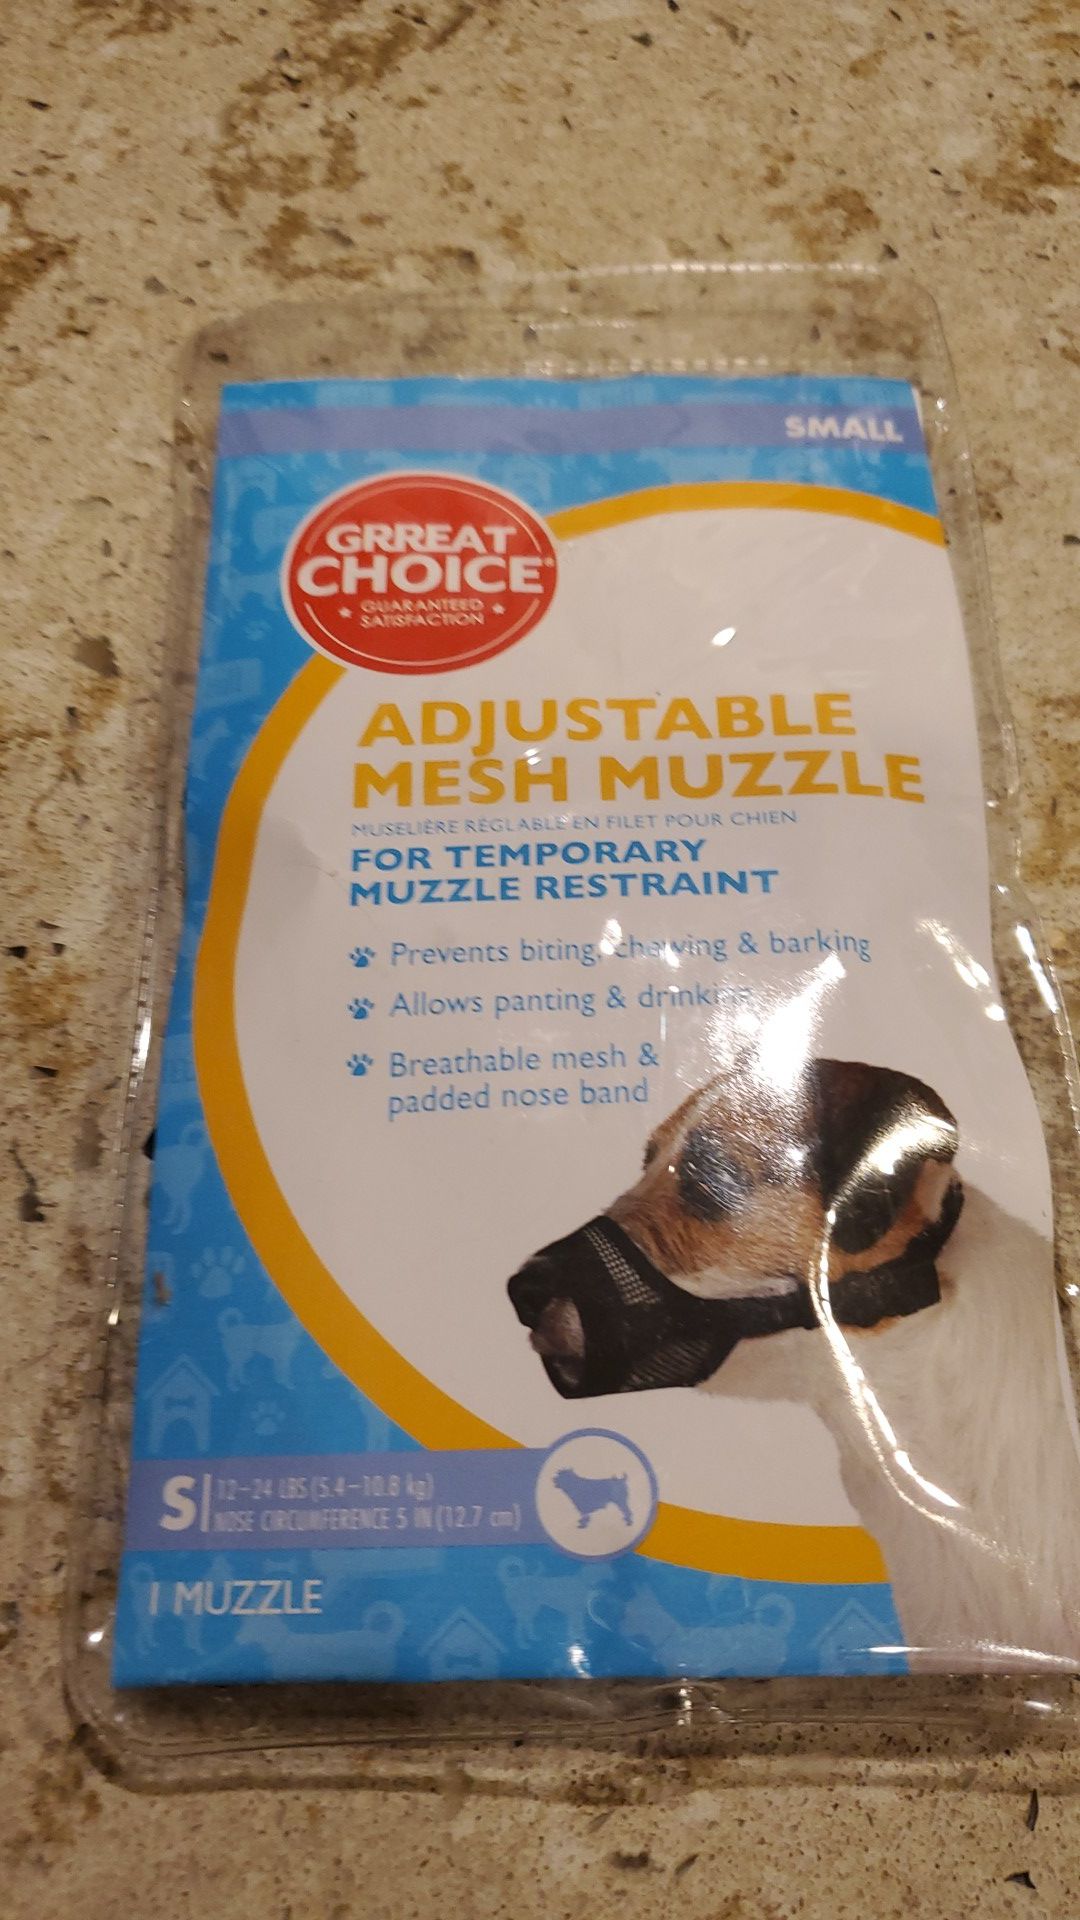 Great Choice Adjustable Mesh Muzzle